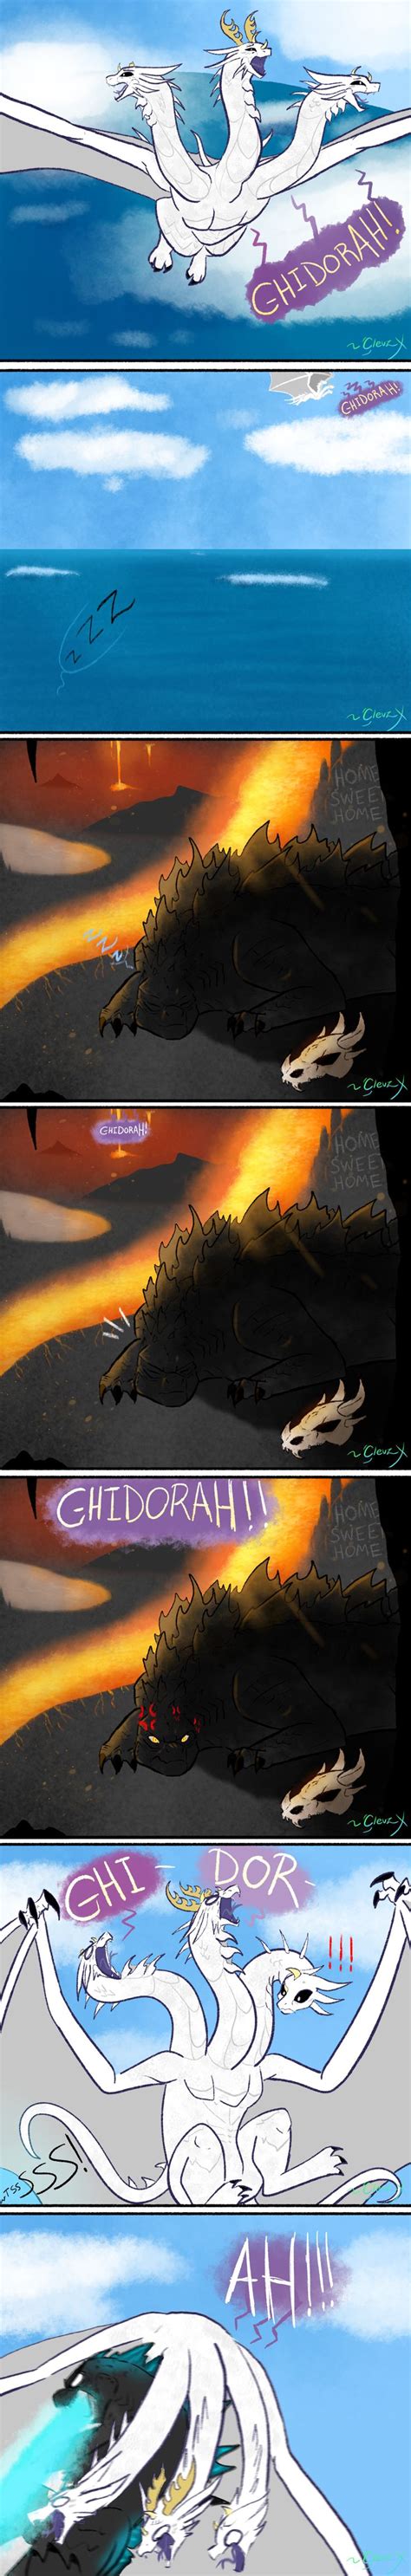 GHIDORAH By ClevzX On DeviantArt Godzilla Comics Godzilla Wallpaper Godzilla Funny